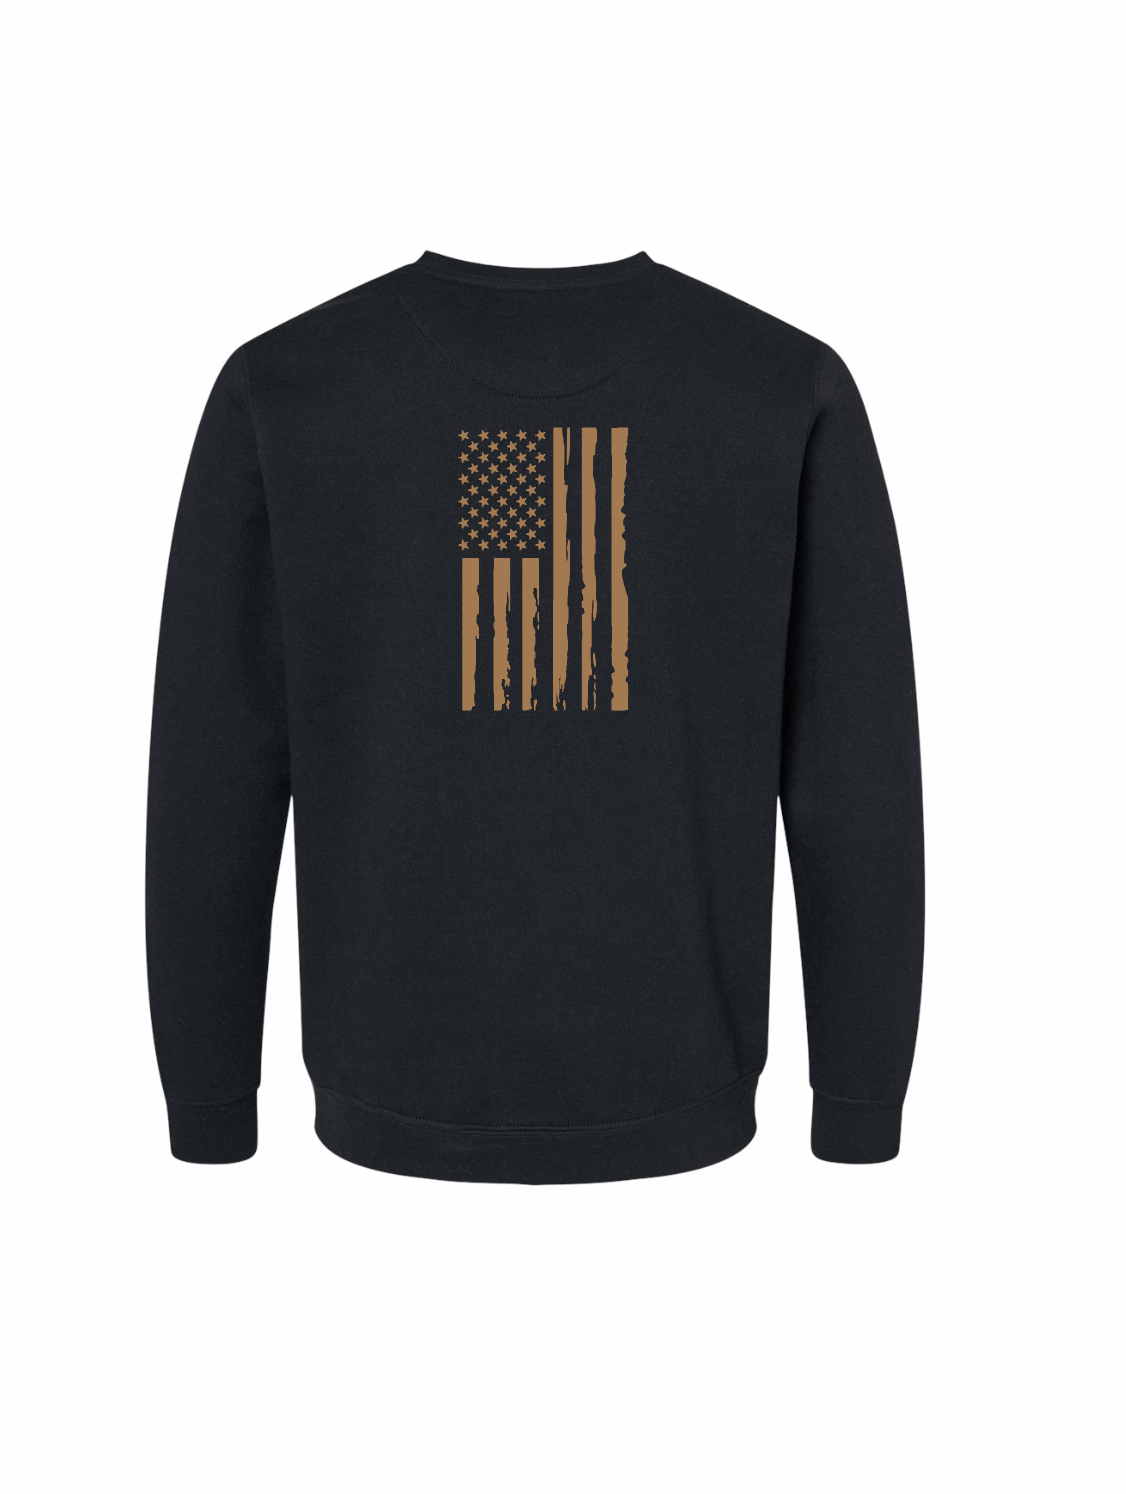 Elevated Fleece Hooded Sweatshirt / Black / Salt and Sand / Patriotic